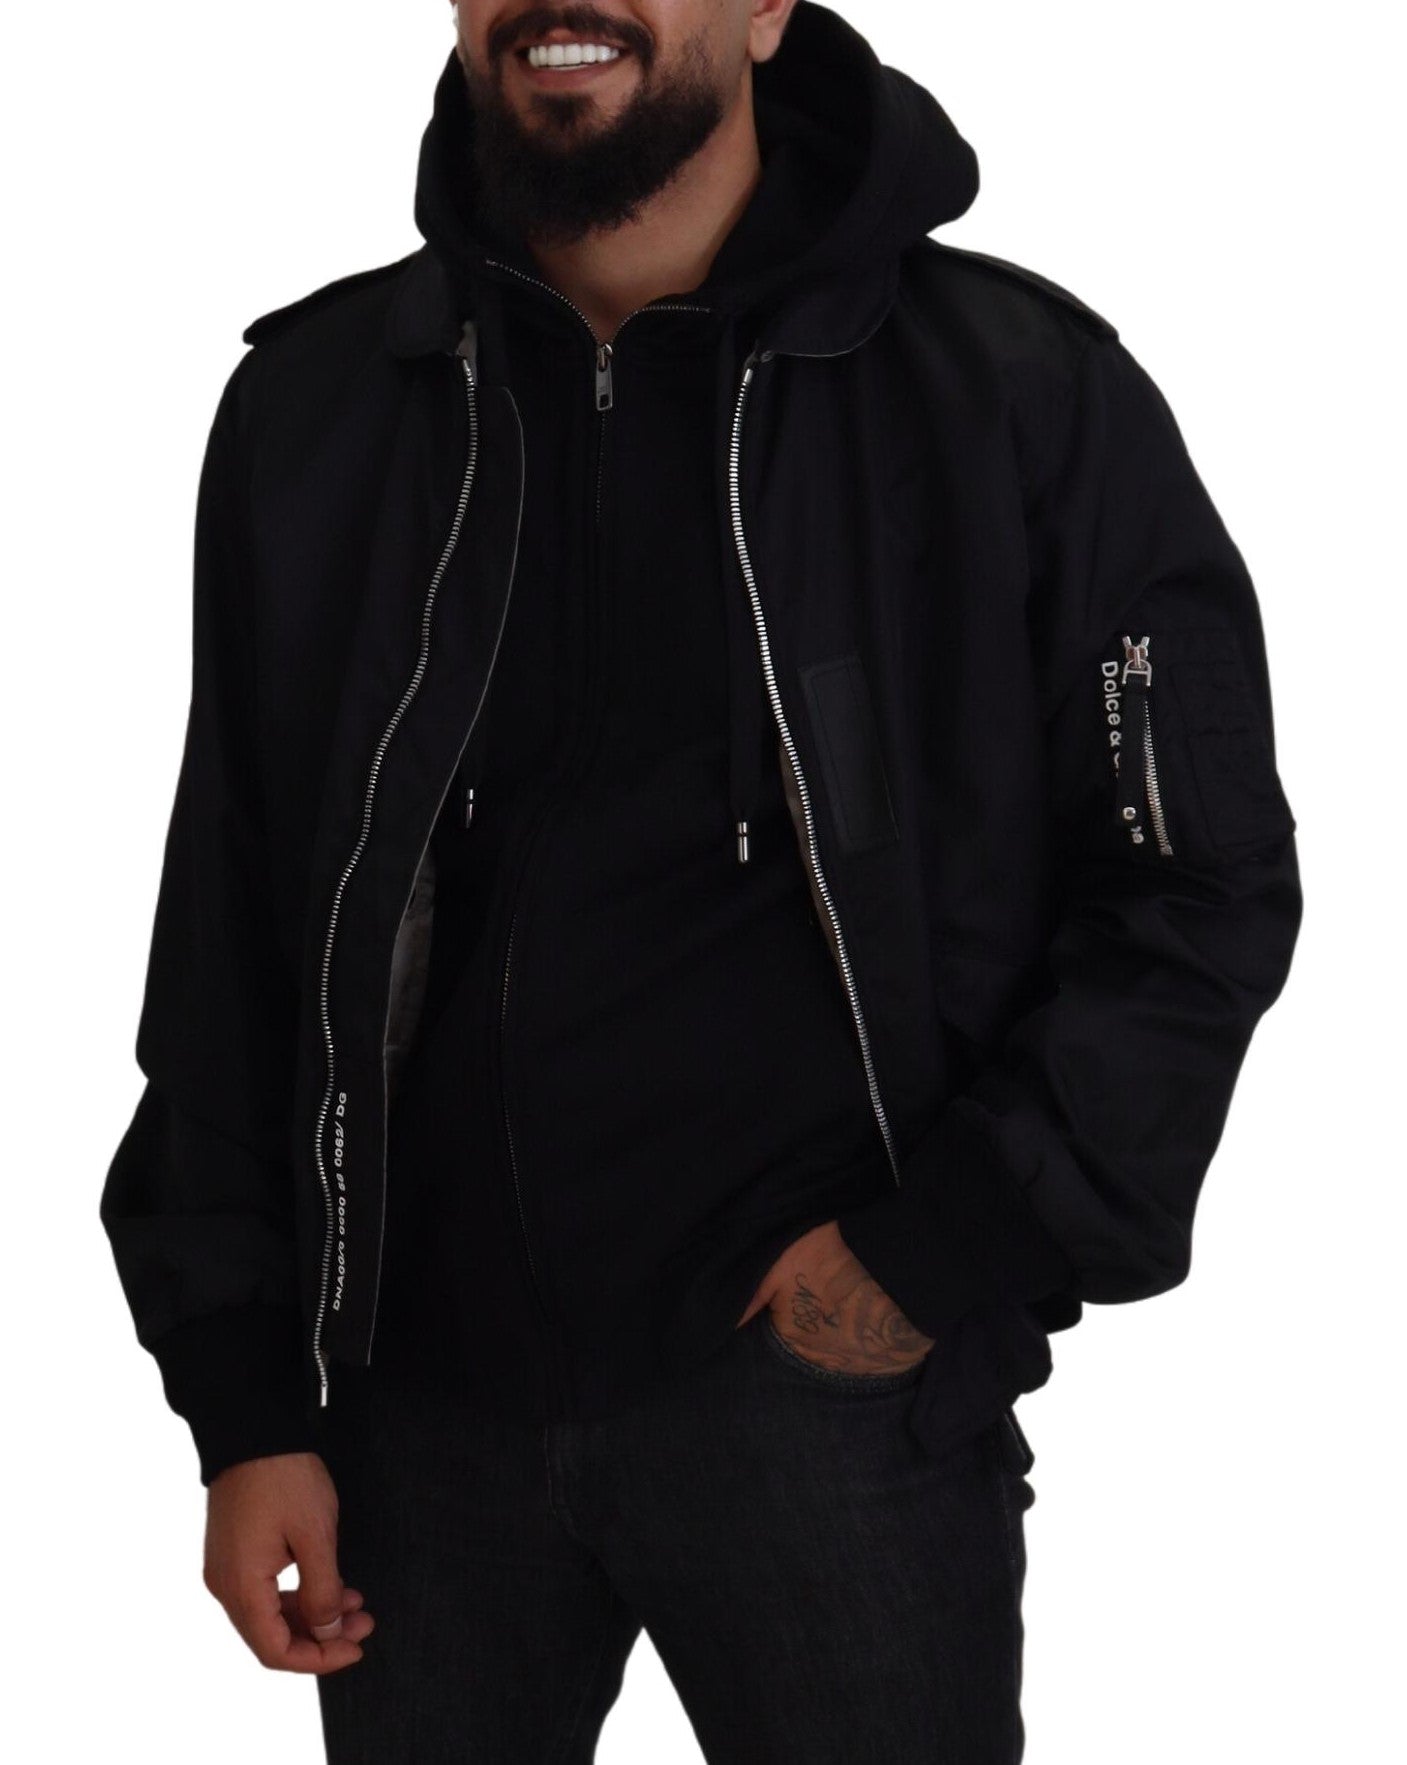 Dolce & Gabbana Sleek Black Hooded Bomber Jacket